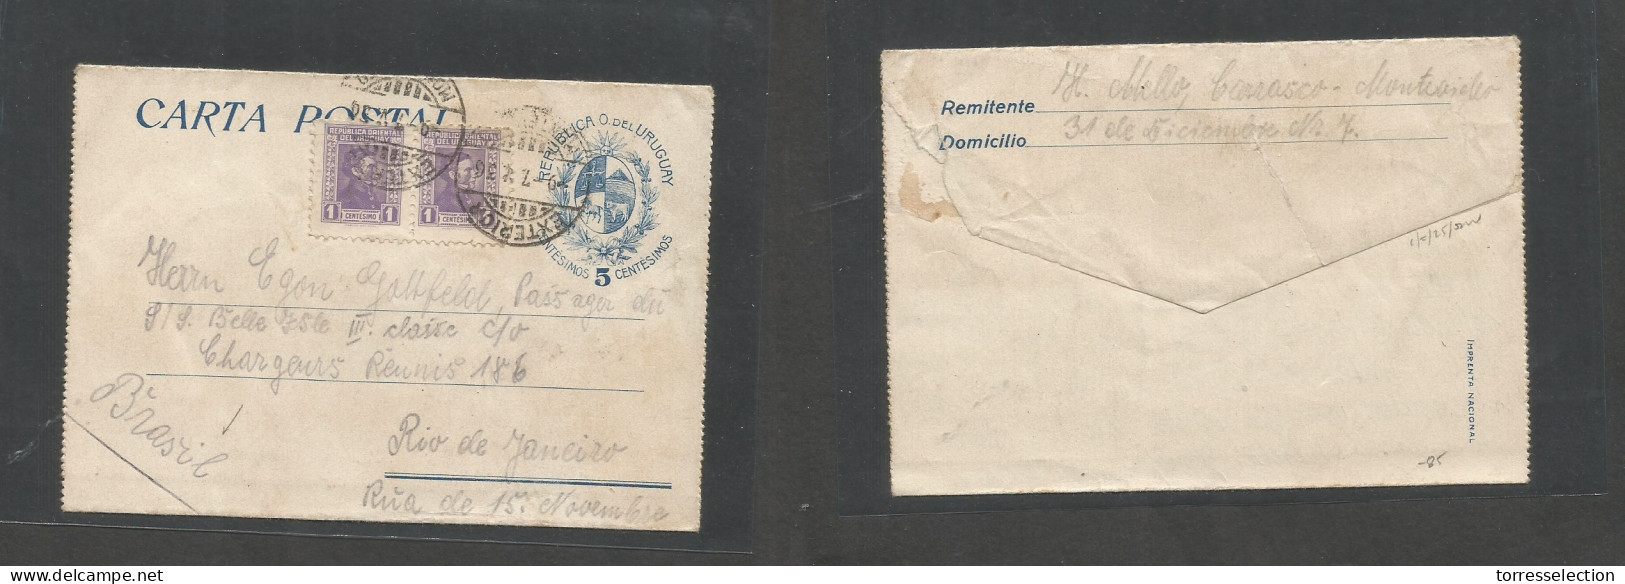 URUGUAY. 1936 (9 July) Mont - Brazil, FJ. 5c Blue Stat Lettersheet + 2 Adtls. VF Usage. Scarce Item. - Uruguay